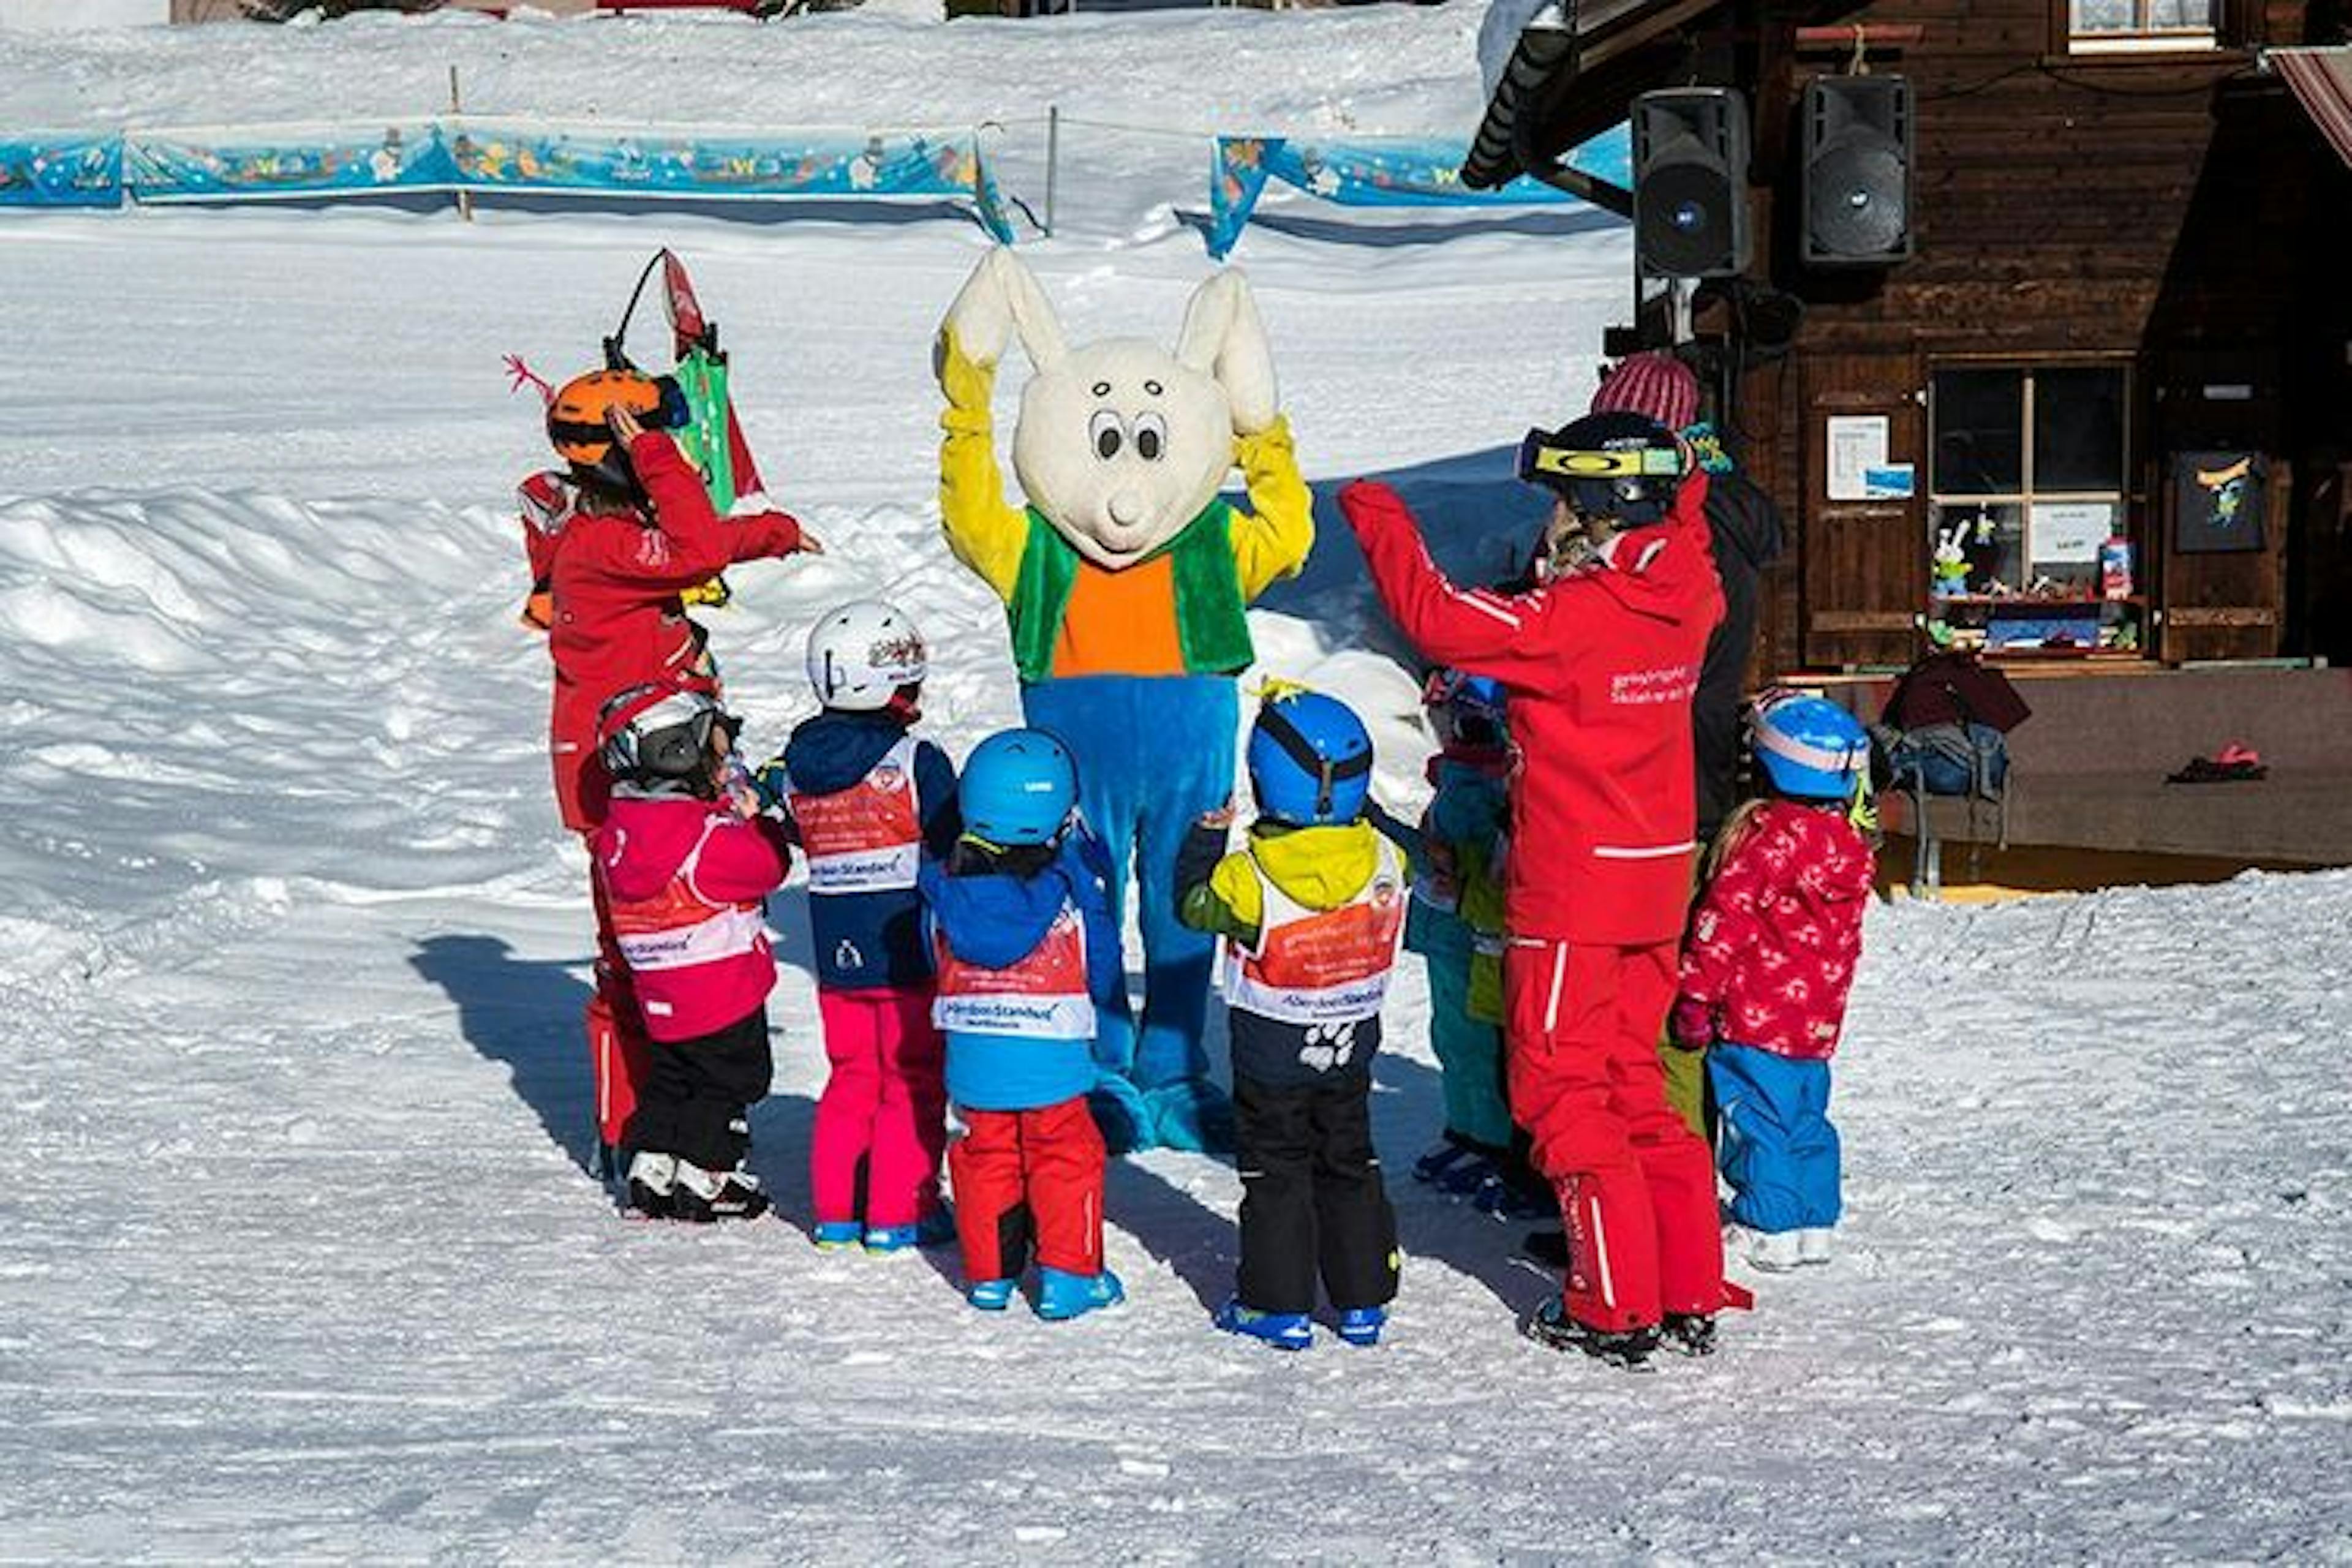 Gruppenuntericht Ski Kinder Bambini